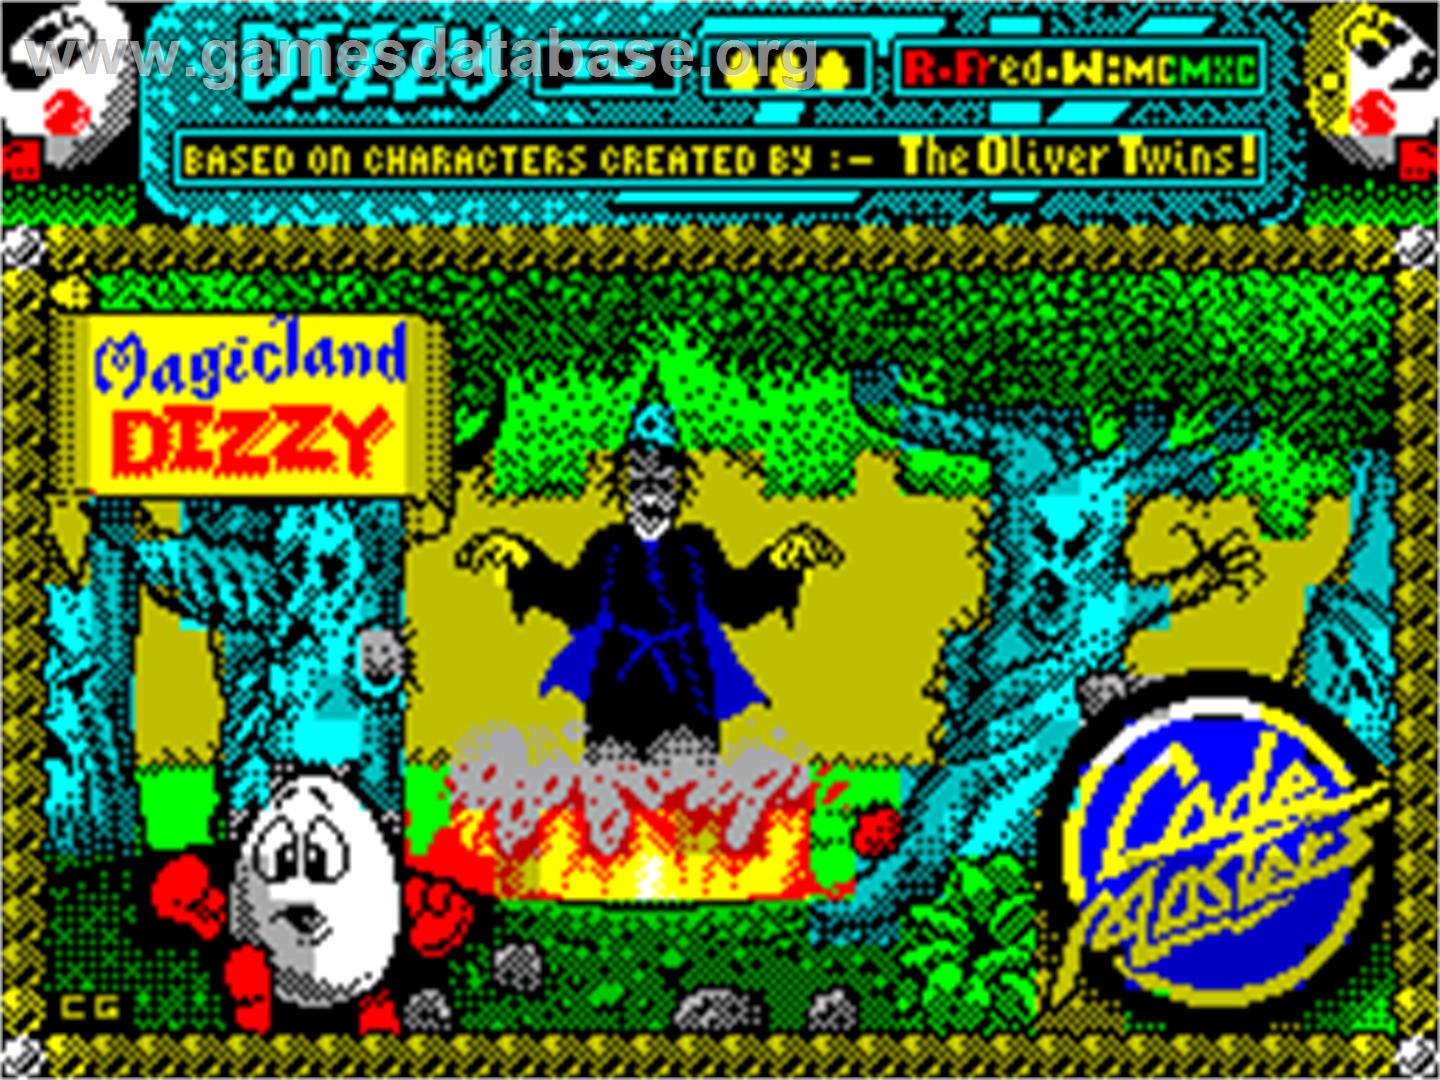 Magicland Dizzy - Sinclair ZX Spectrum - Artwork - Title Screen